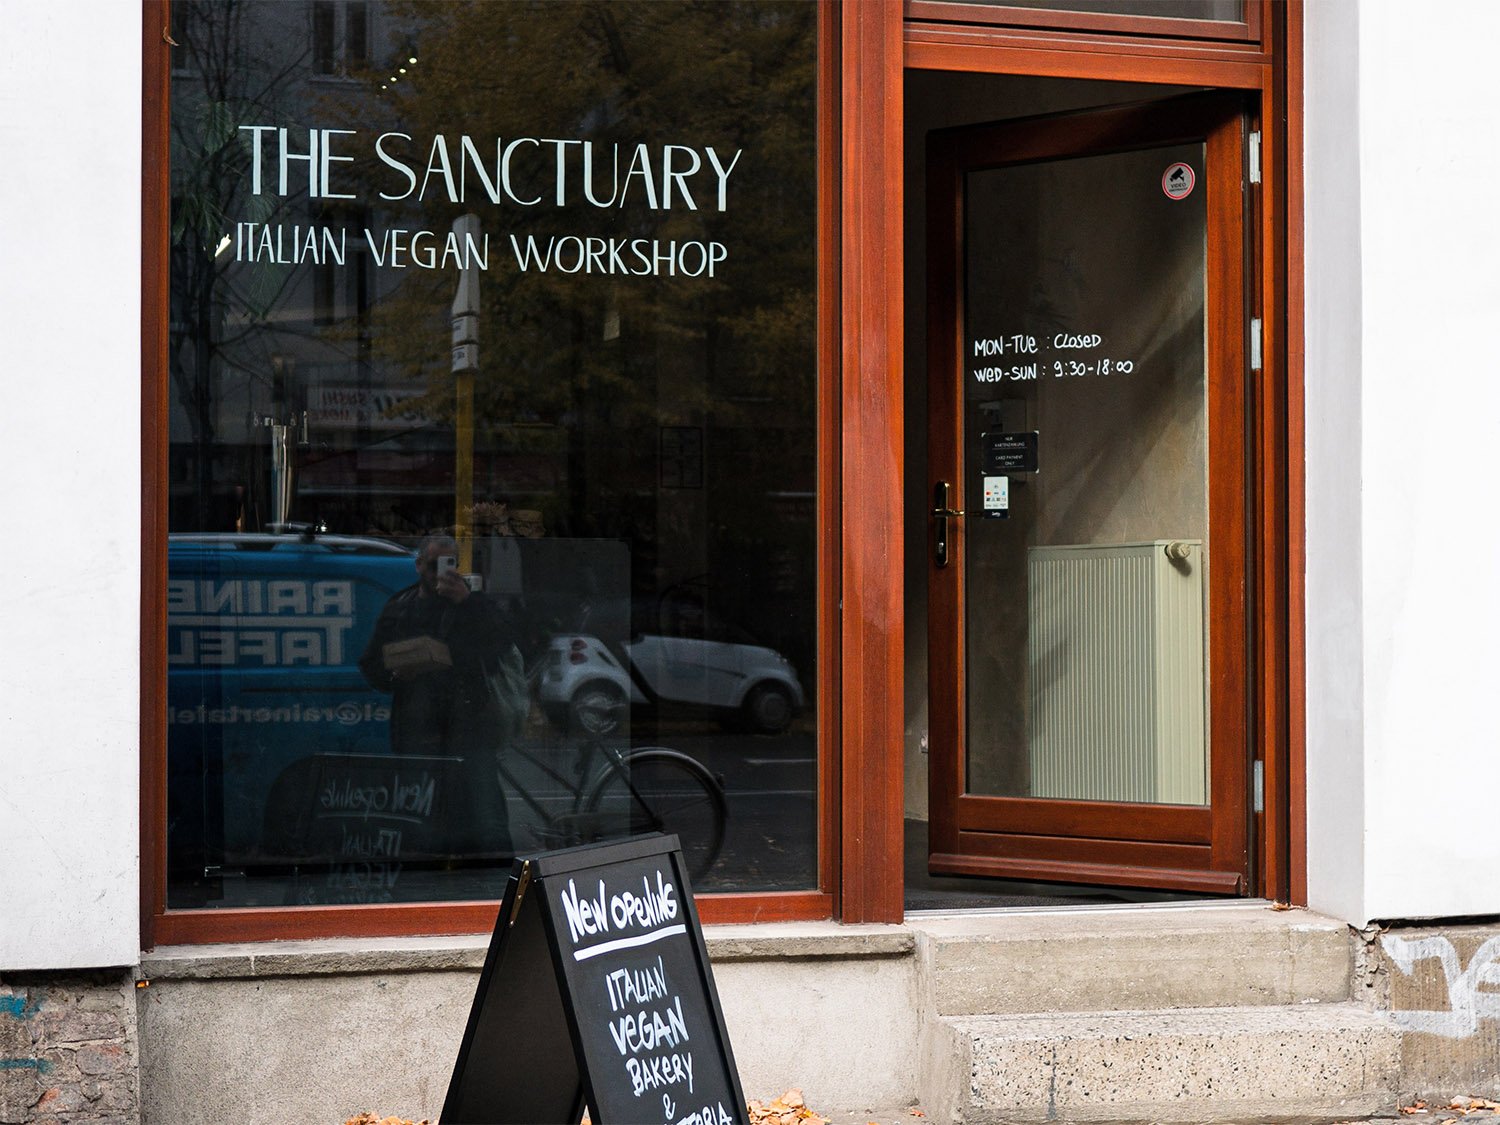 The Sanctuary nennt sich selbst auch "Italien Vegan Workshop"